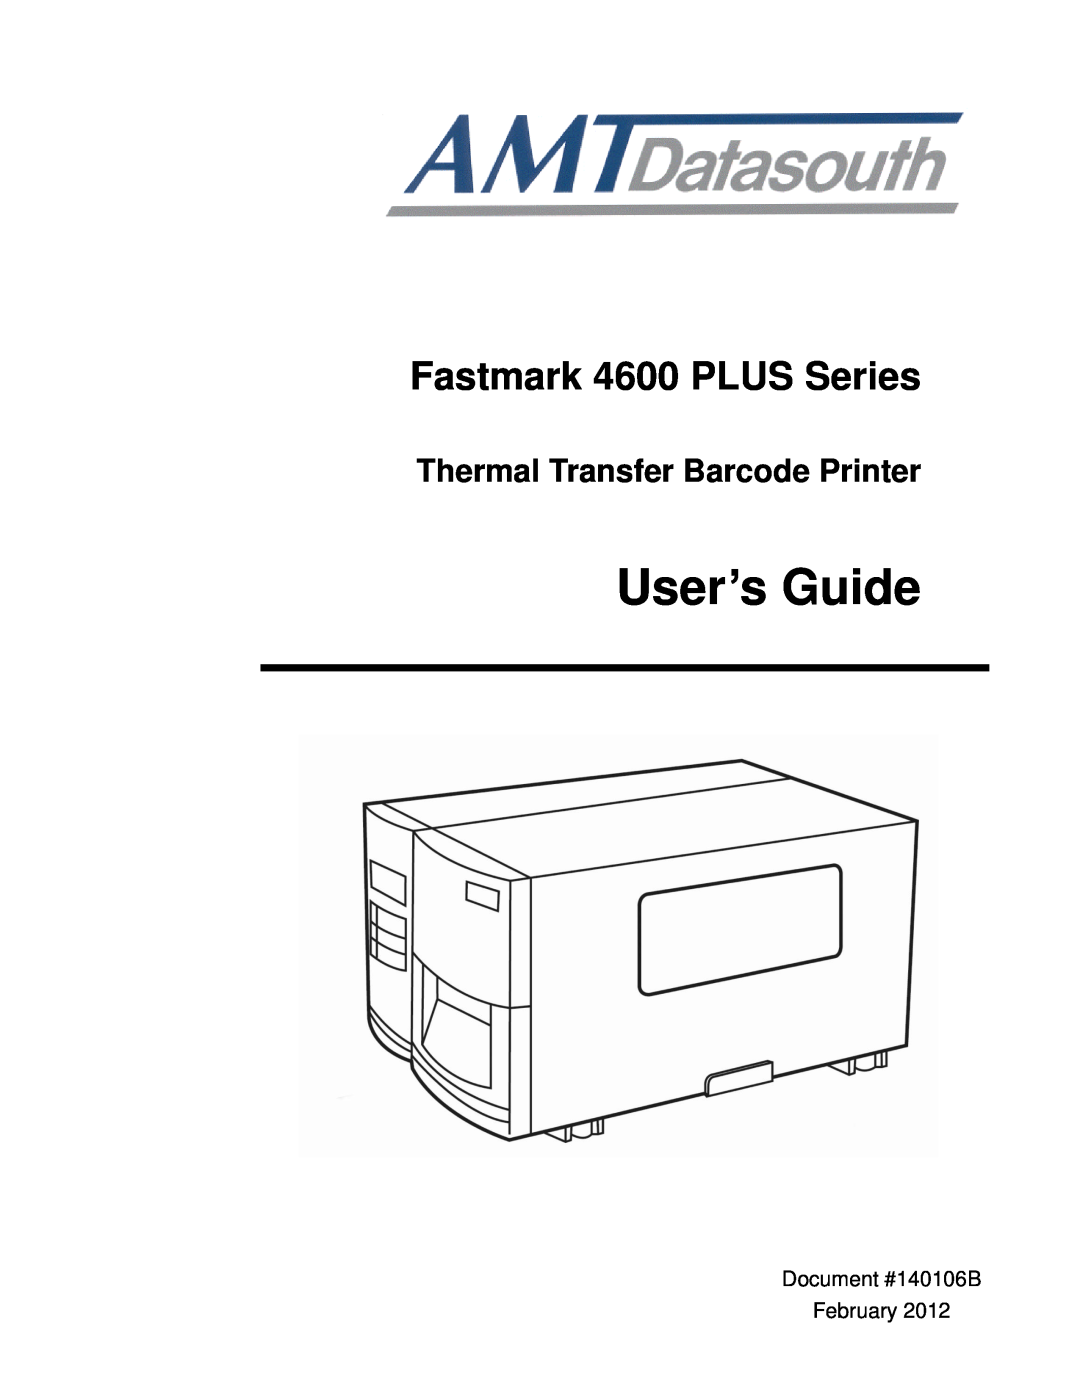 AMT Datasouth manual User’s Guide, Fastmark 4600 PLUS Series, Thermal Transfer Barcode Printer 